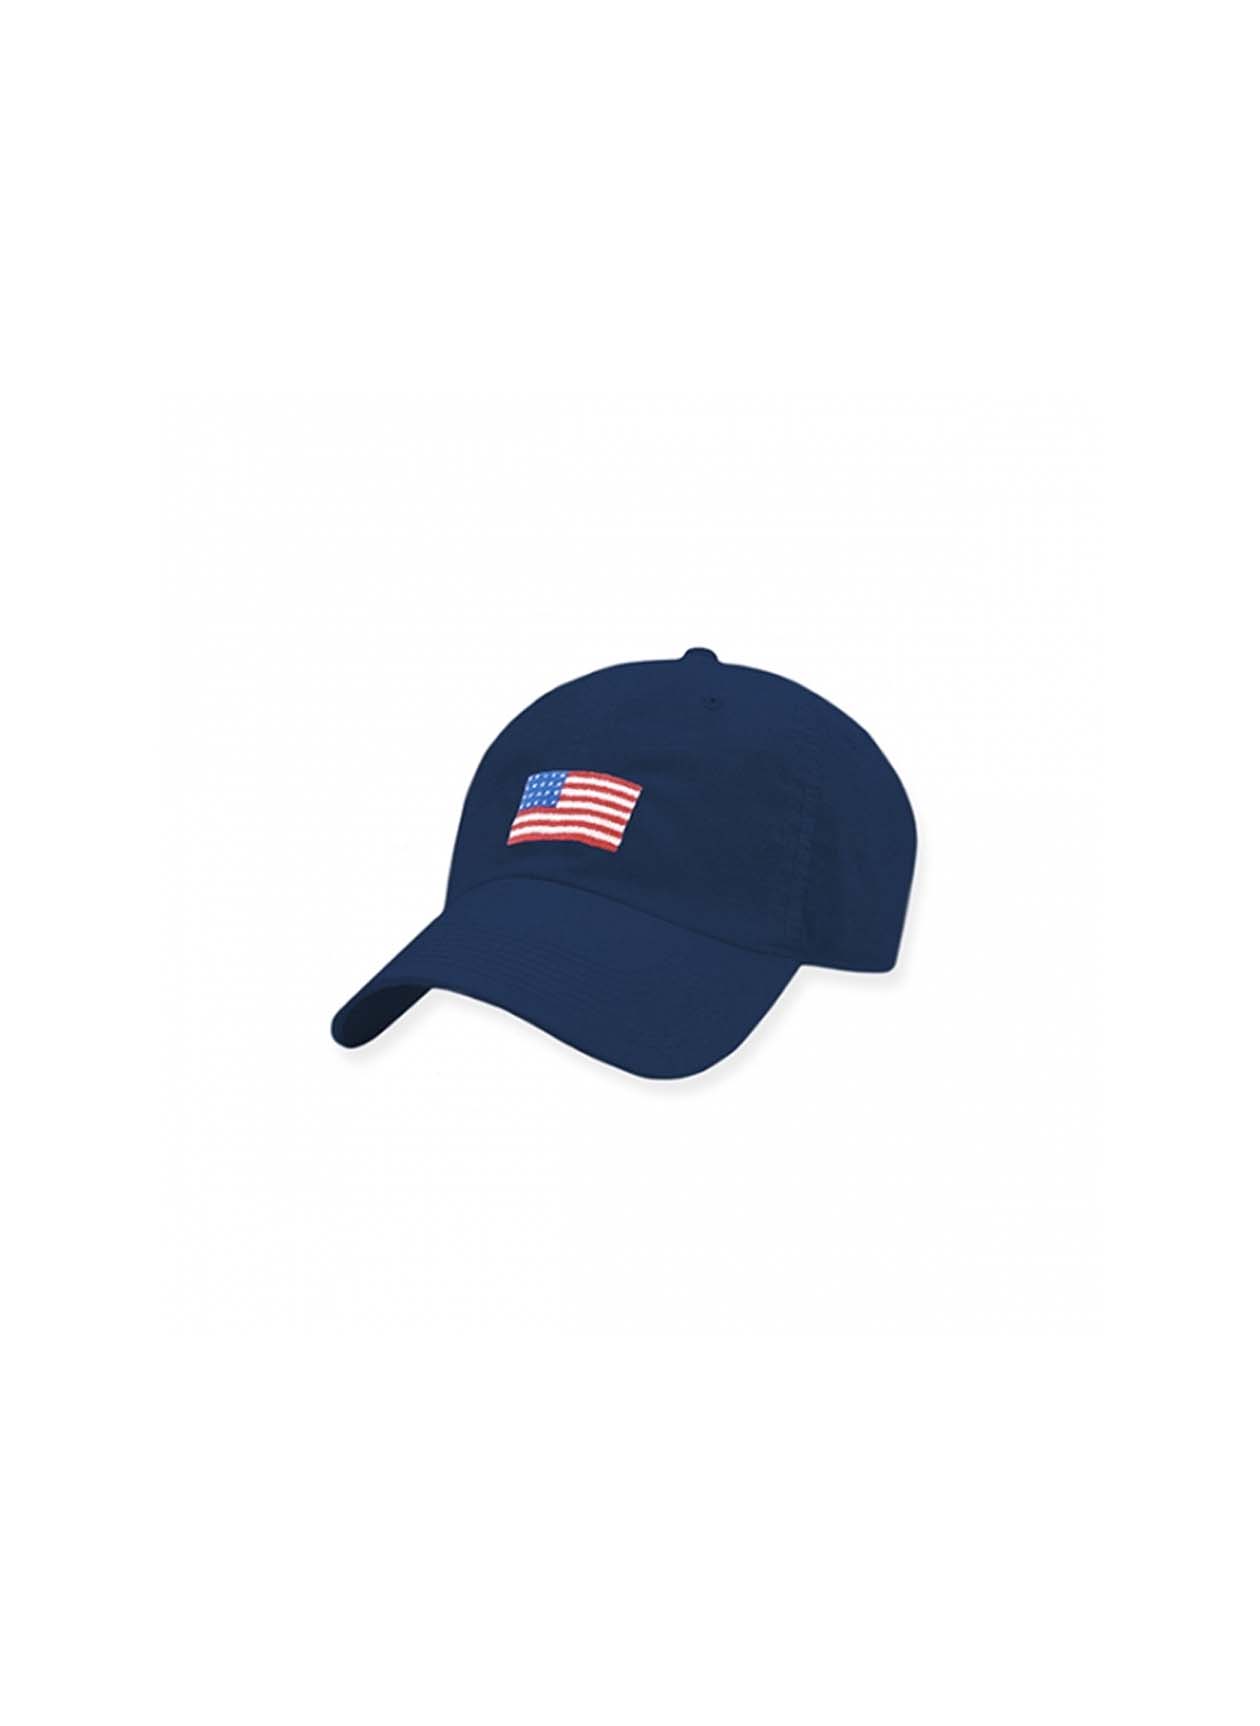 AMERICAN FLAG HAT - NAVY